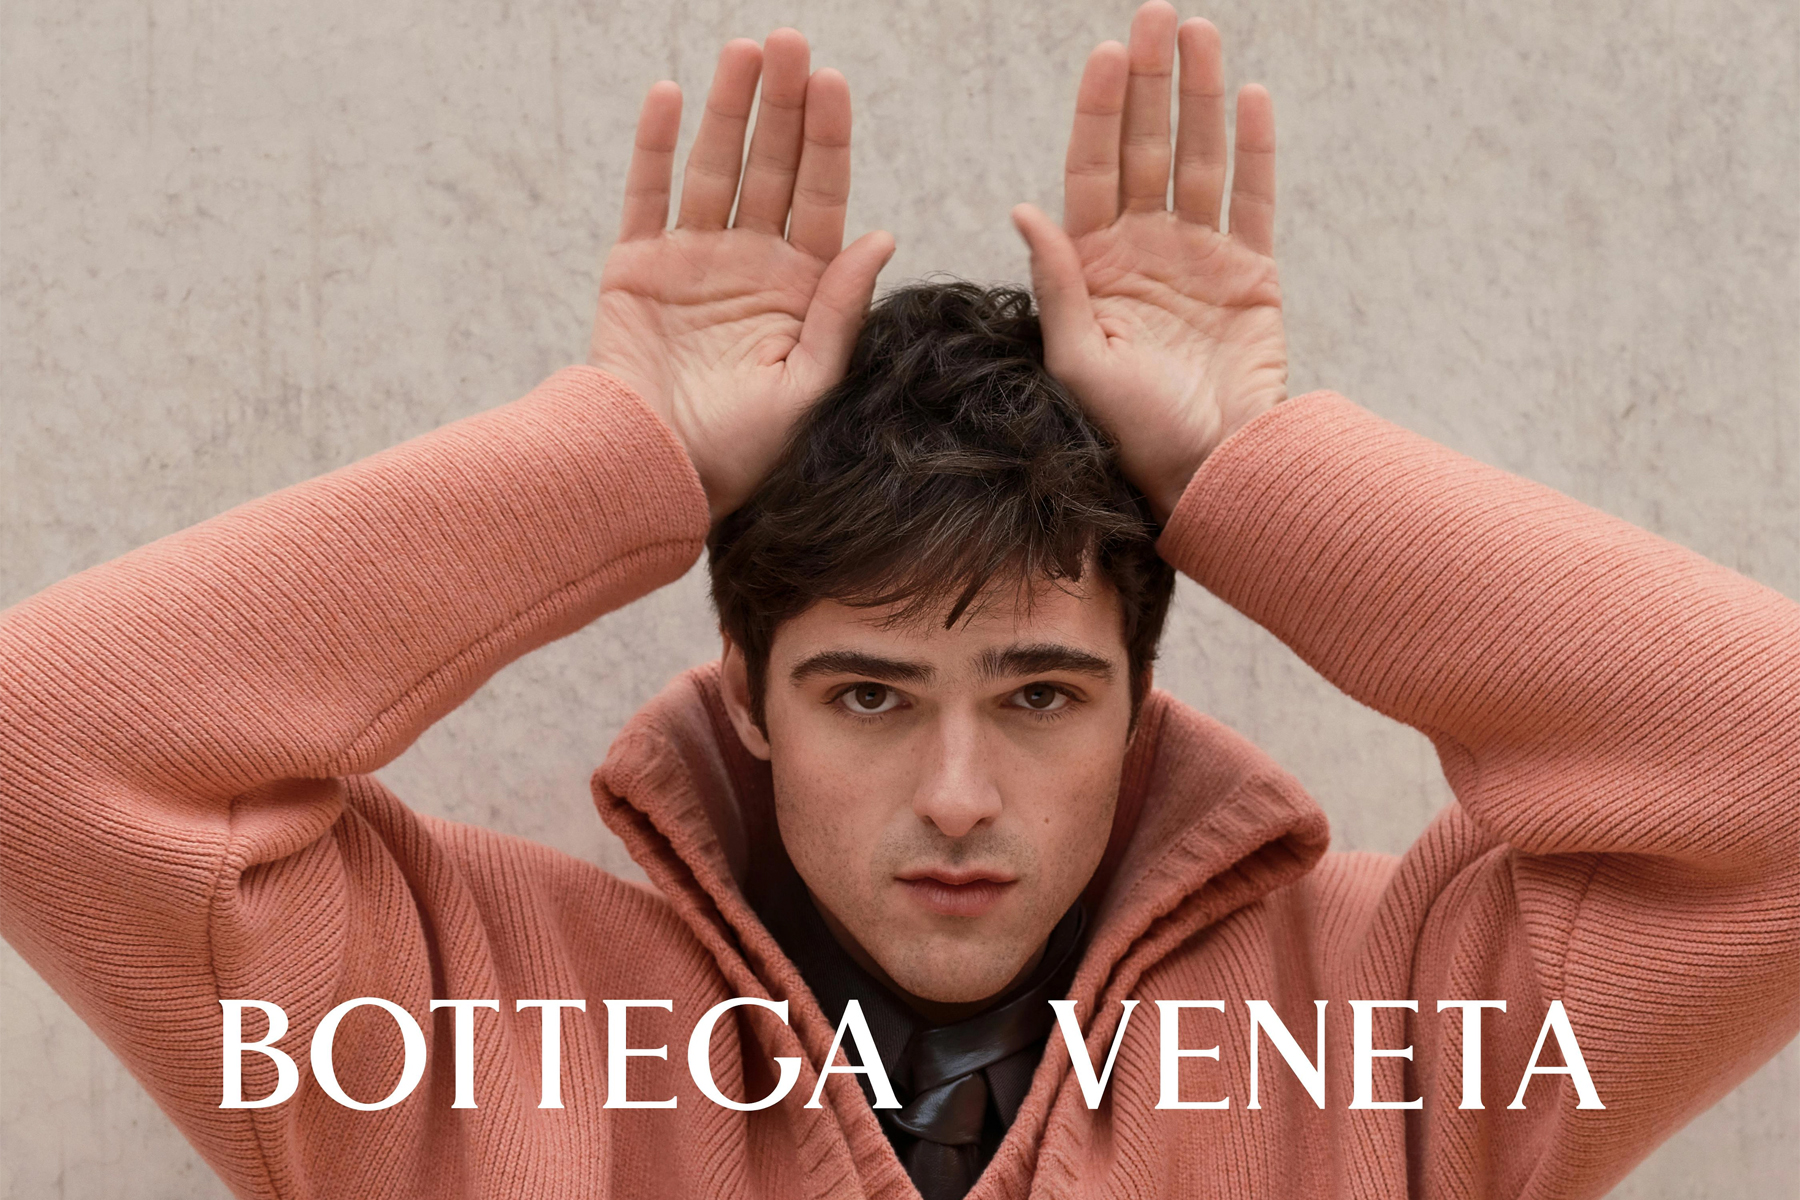 Jacob Elordi brand ambassador Bottega Veneta